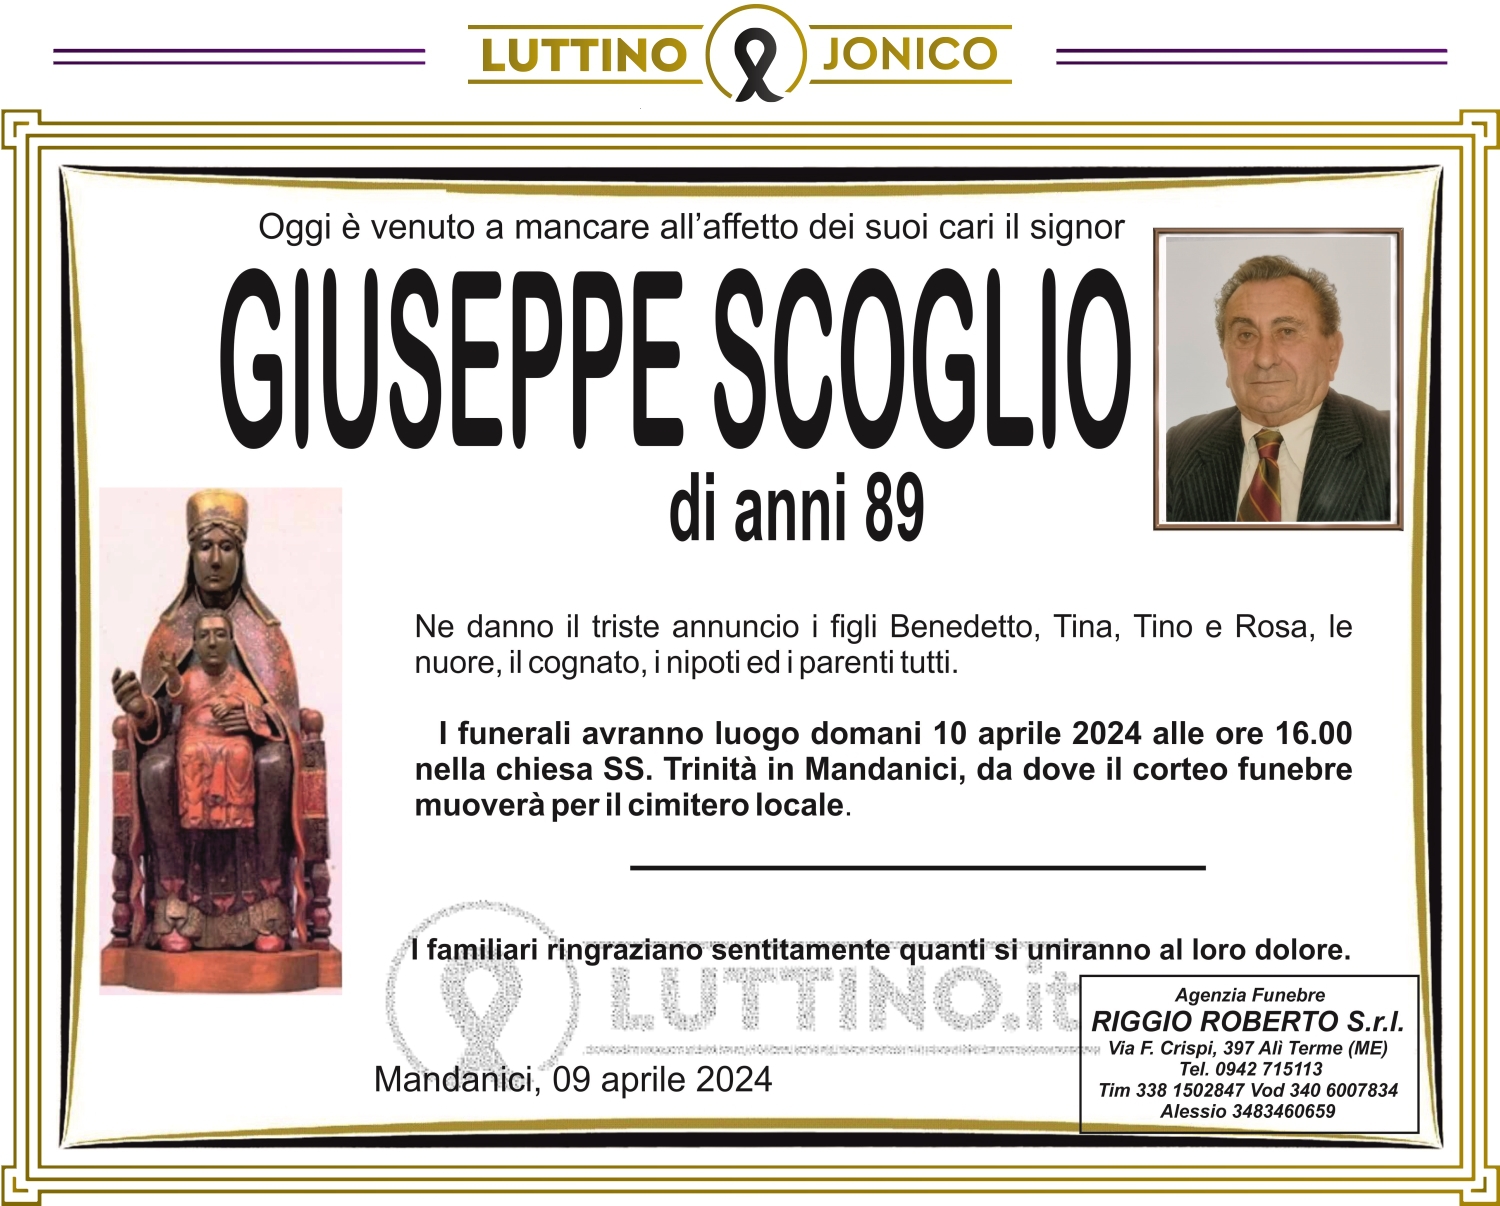 Giuseppe Scoglio